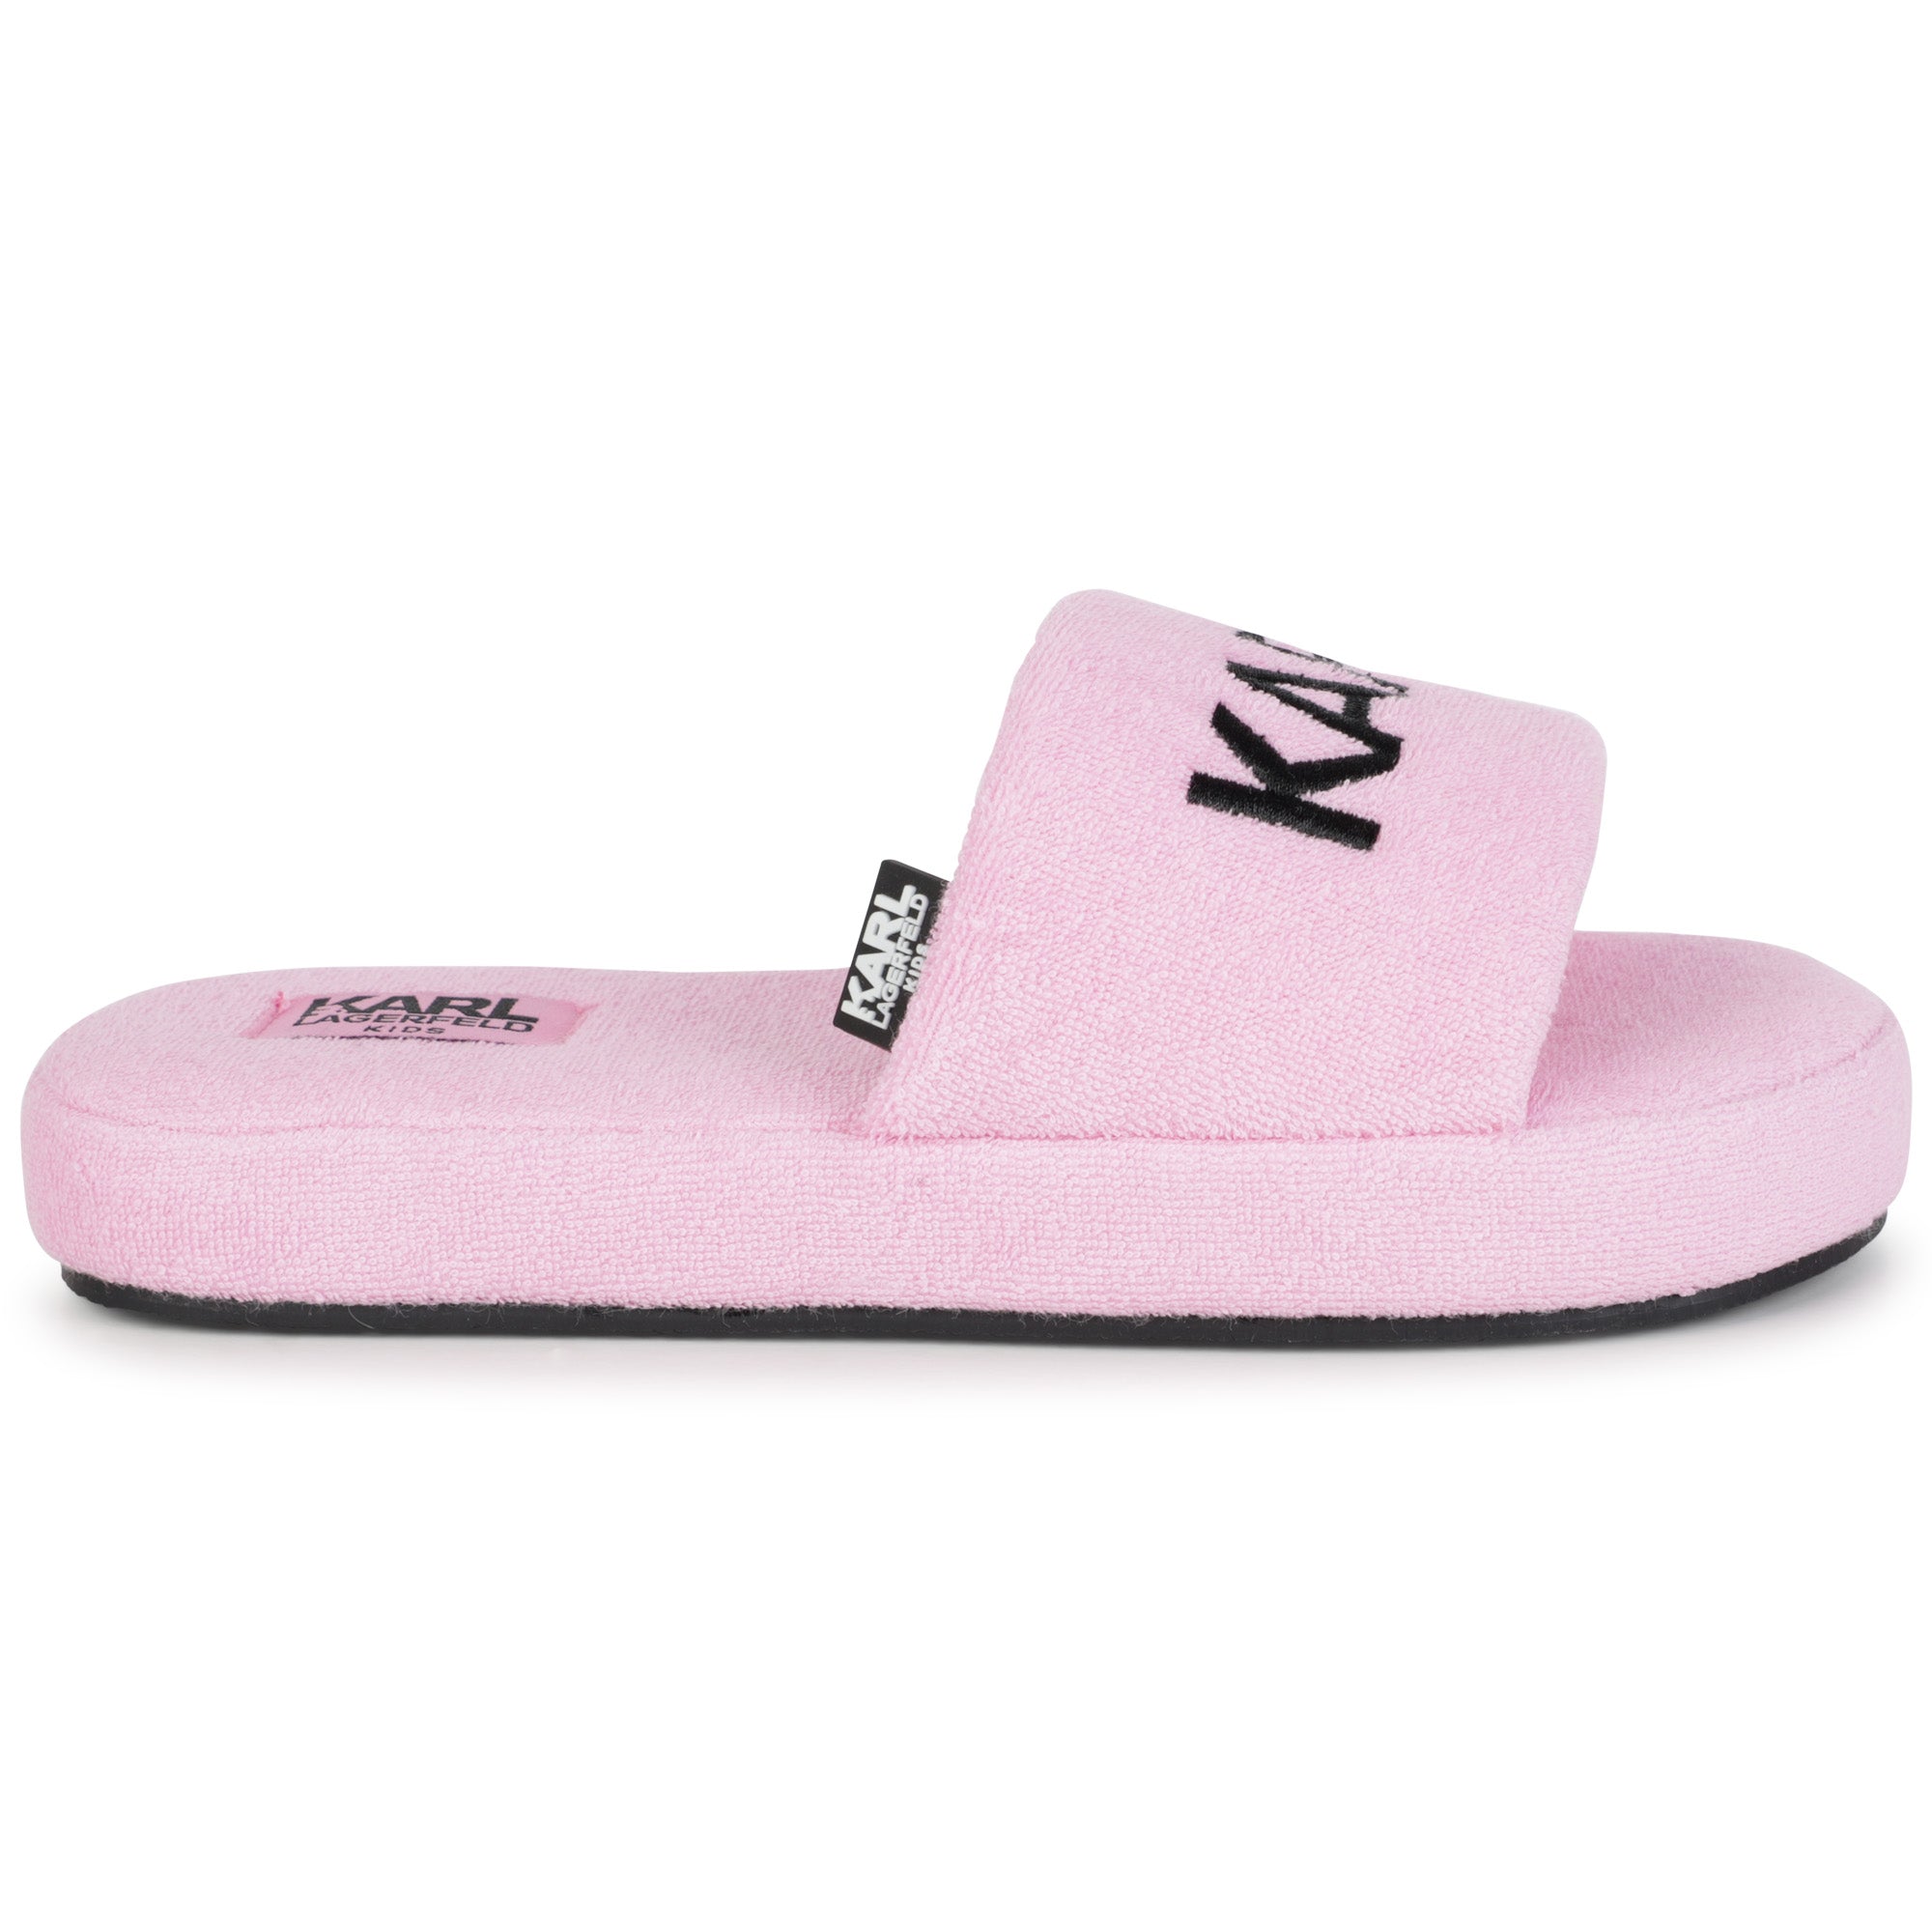 Karl Lagerfeld Pink Slides